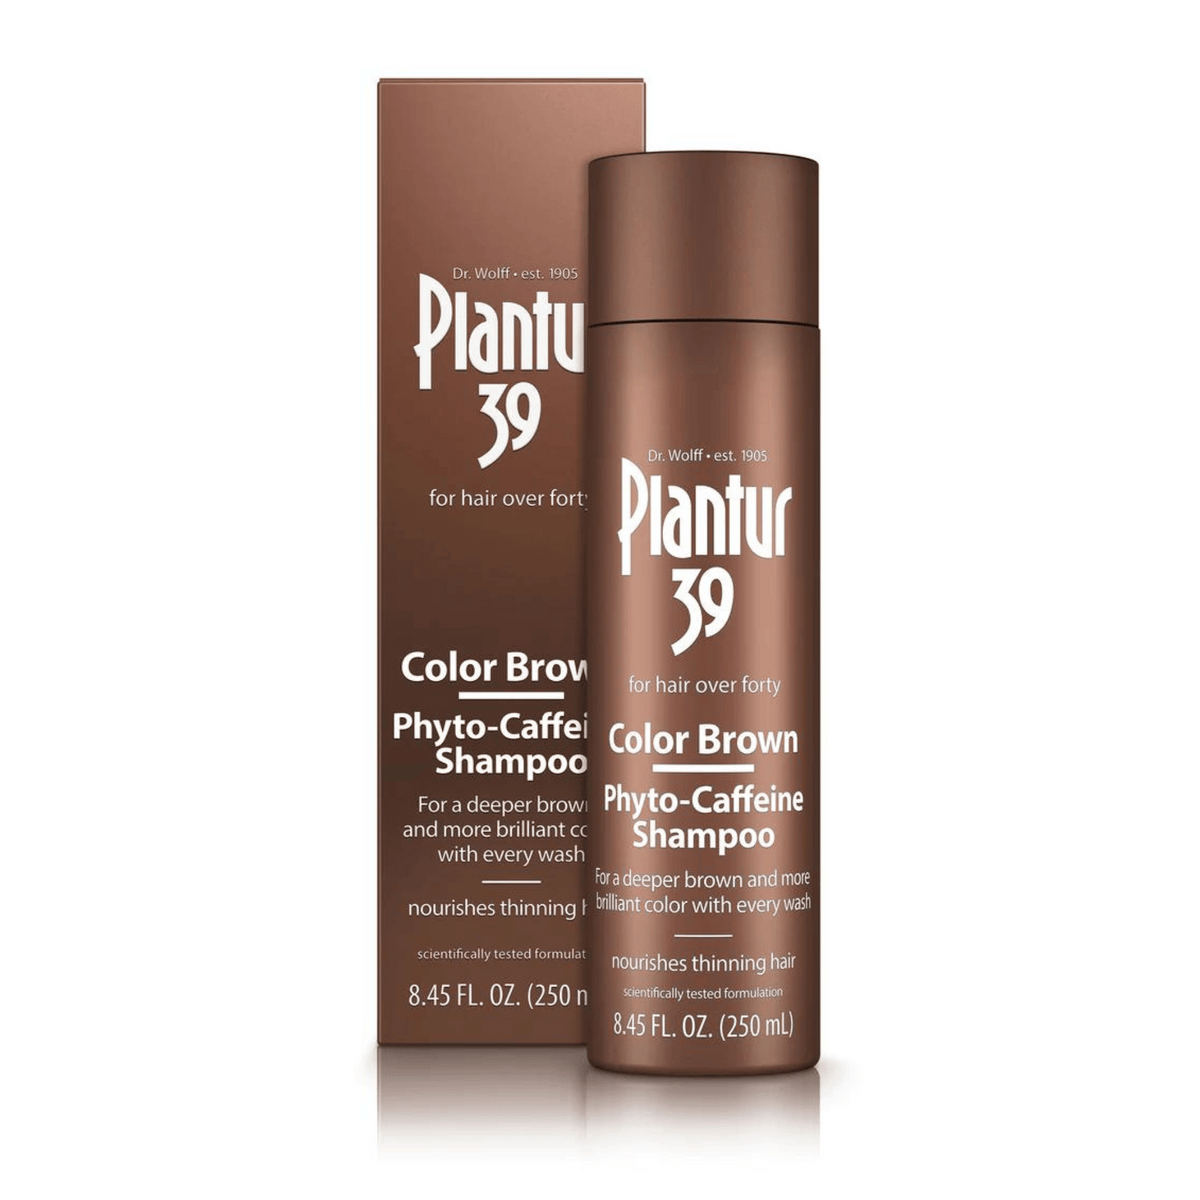 Alternate Image of Plantur 39 Color Brown Phyto-Caffeine Shampoo